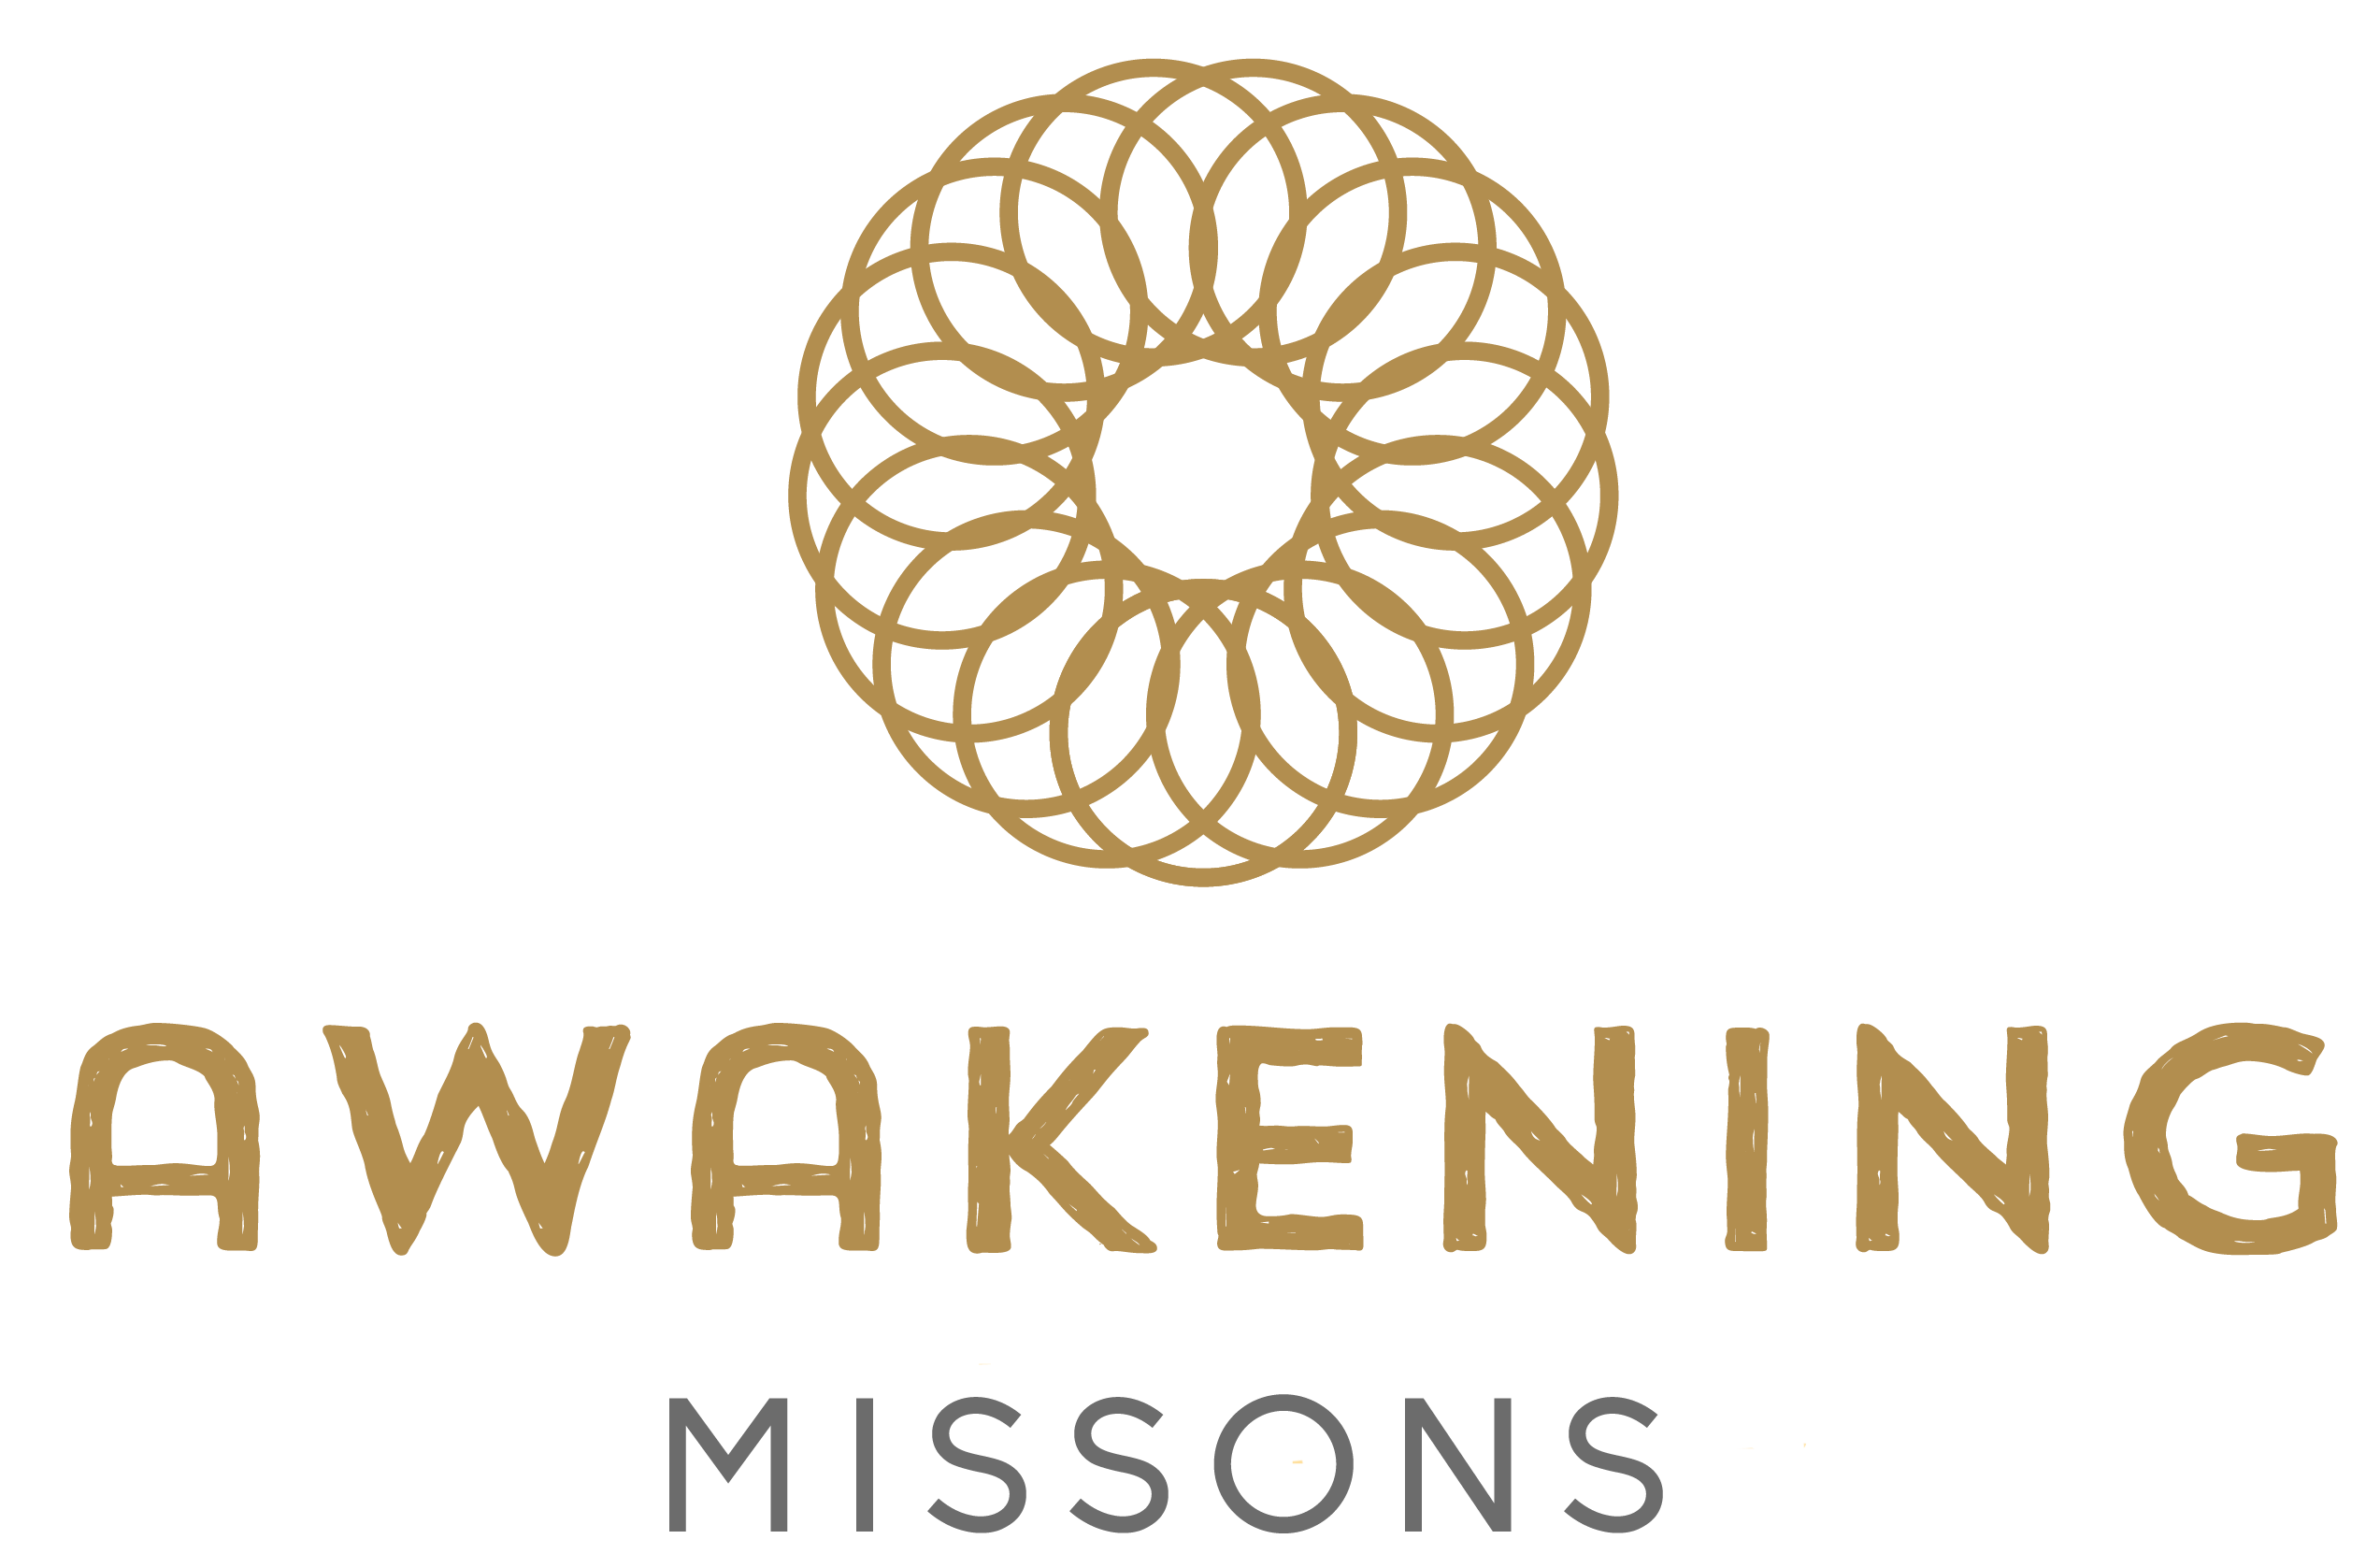 Awakening Missions